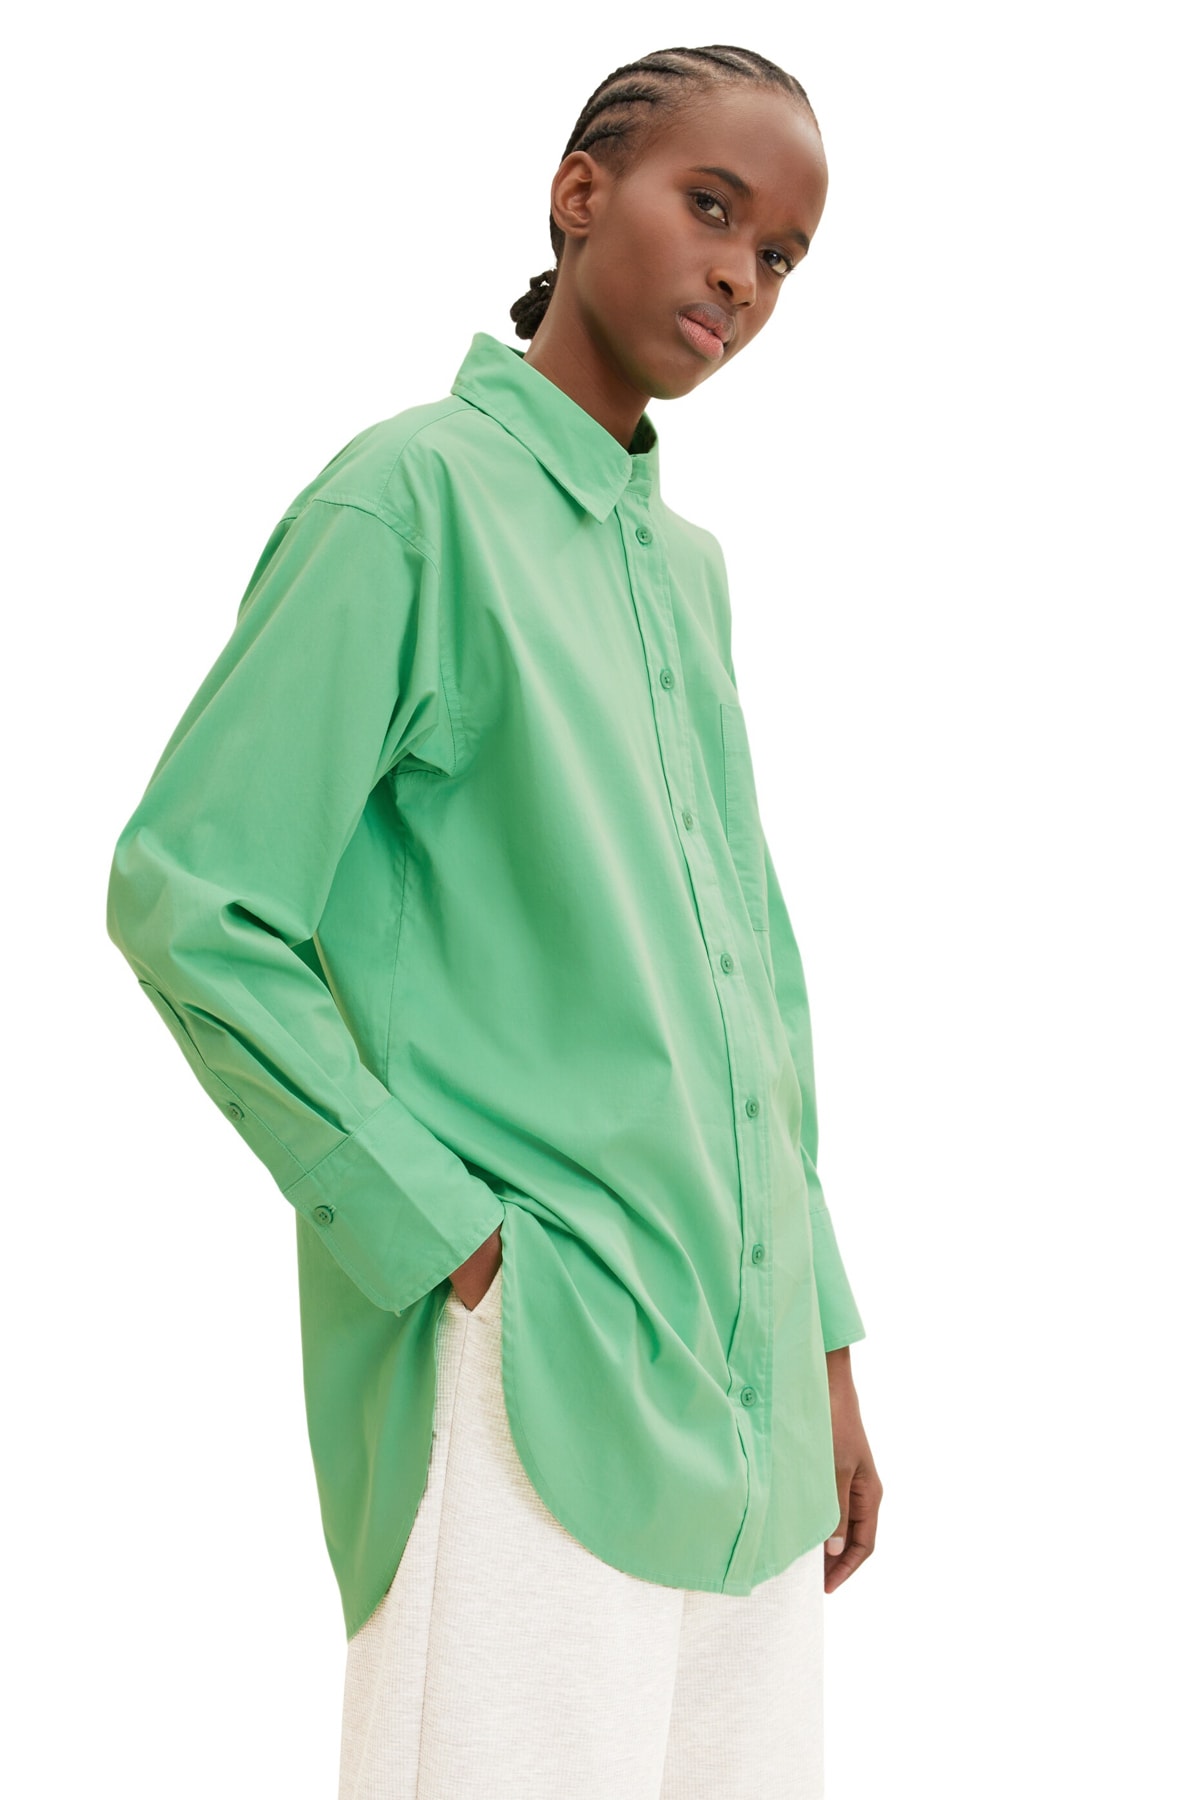 Tom Tailor Denim Bluse Grün Oversized Fast ausverkauft